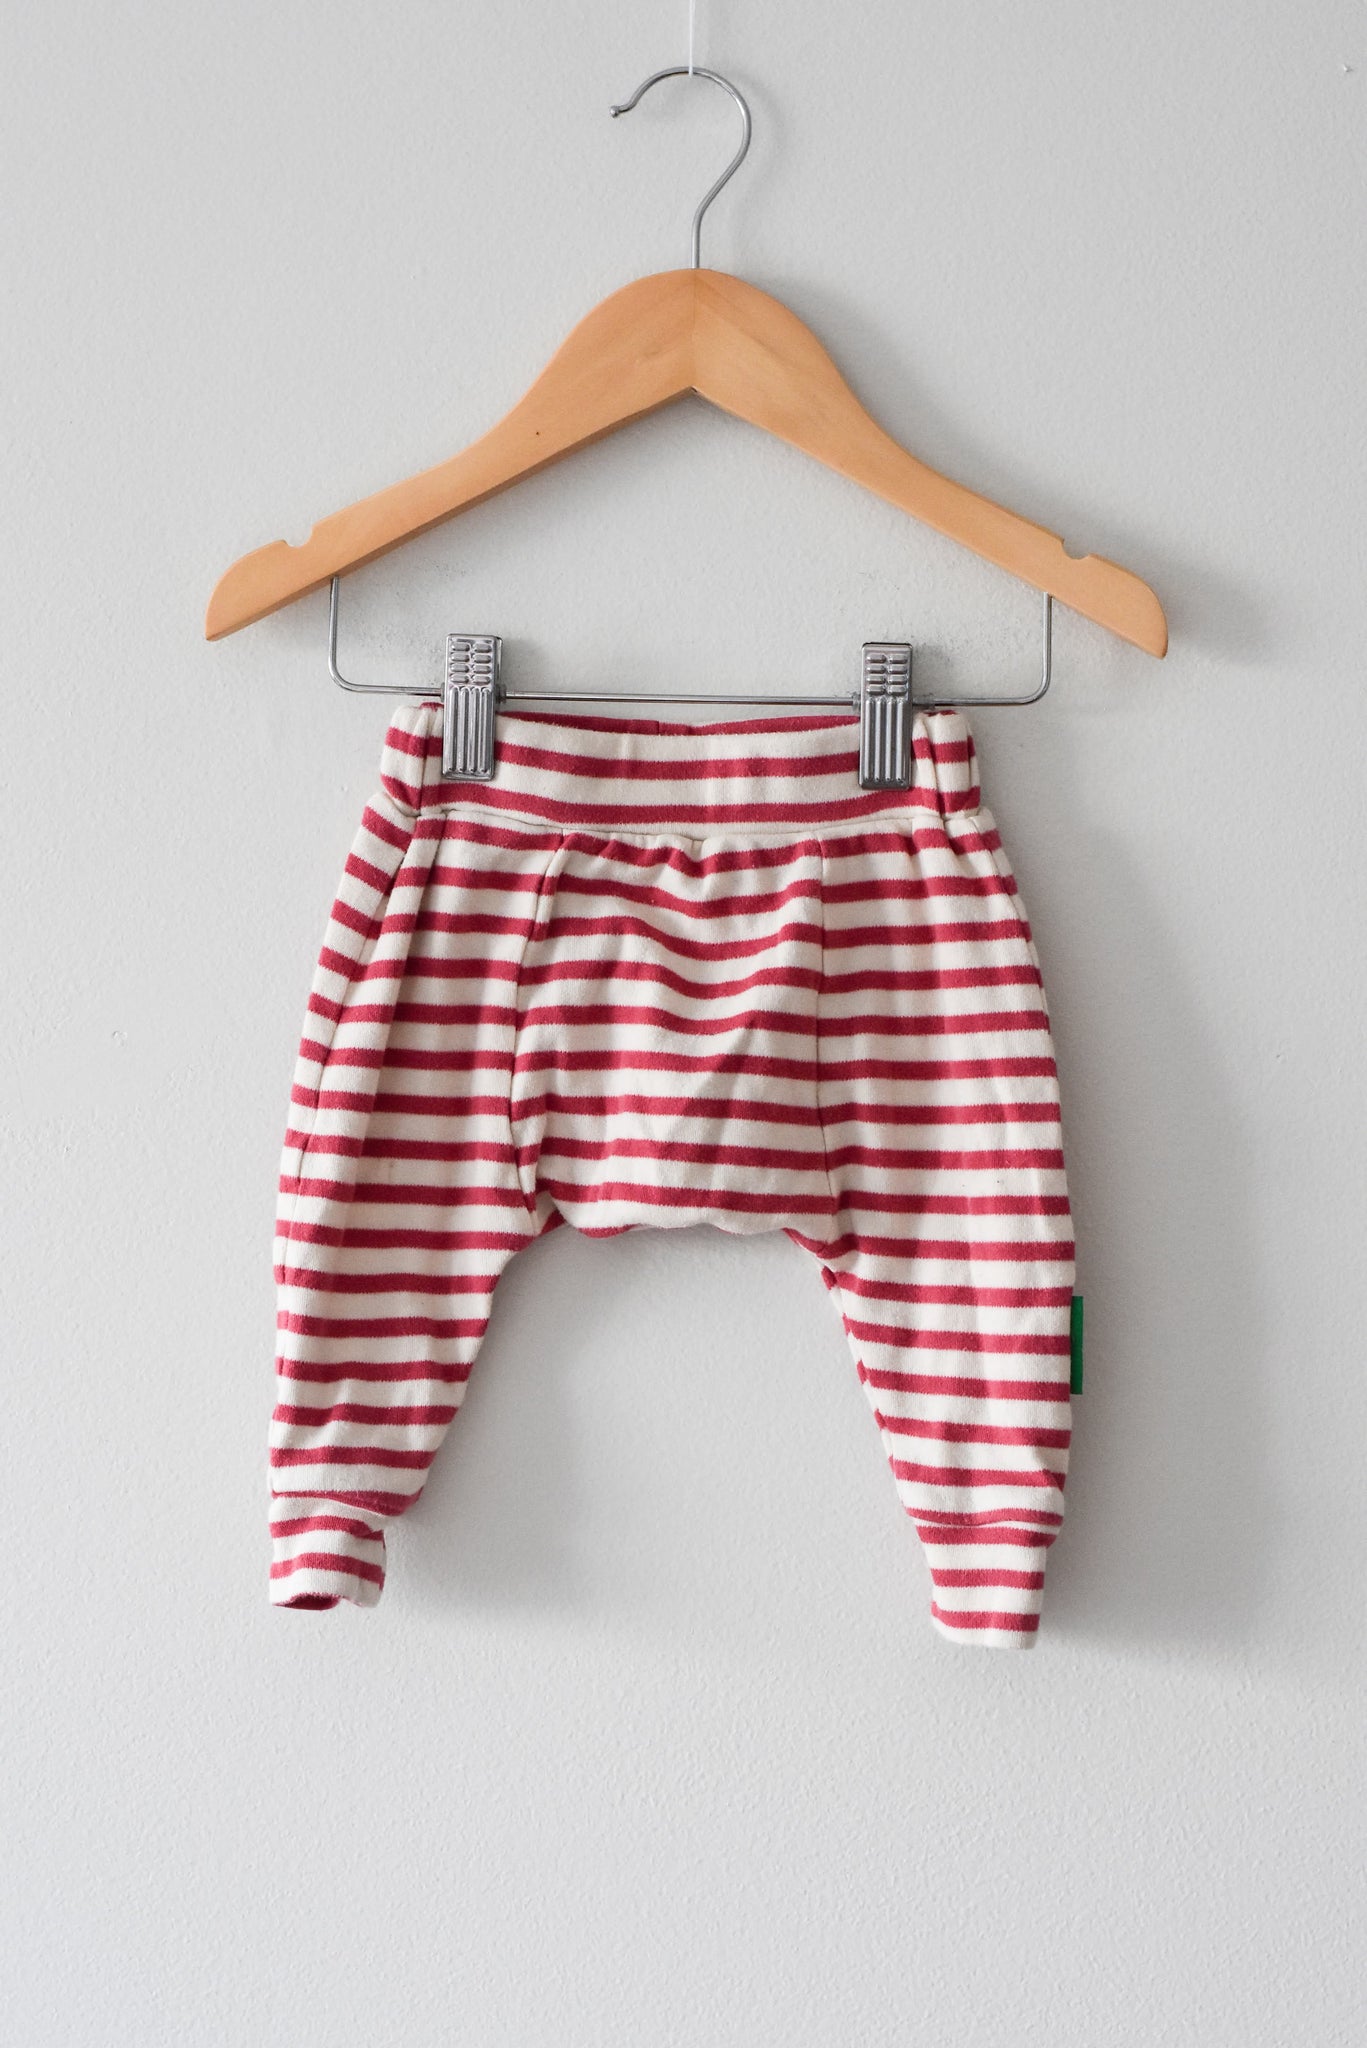 Baby Boy 6PC Clothes Lot Size 03 Months PantsBodysuitsShirts CBA42   eBay